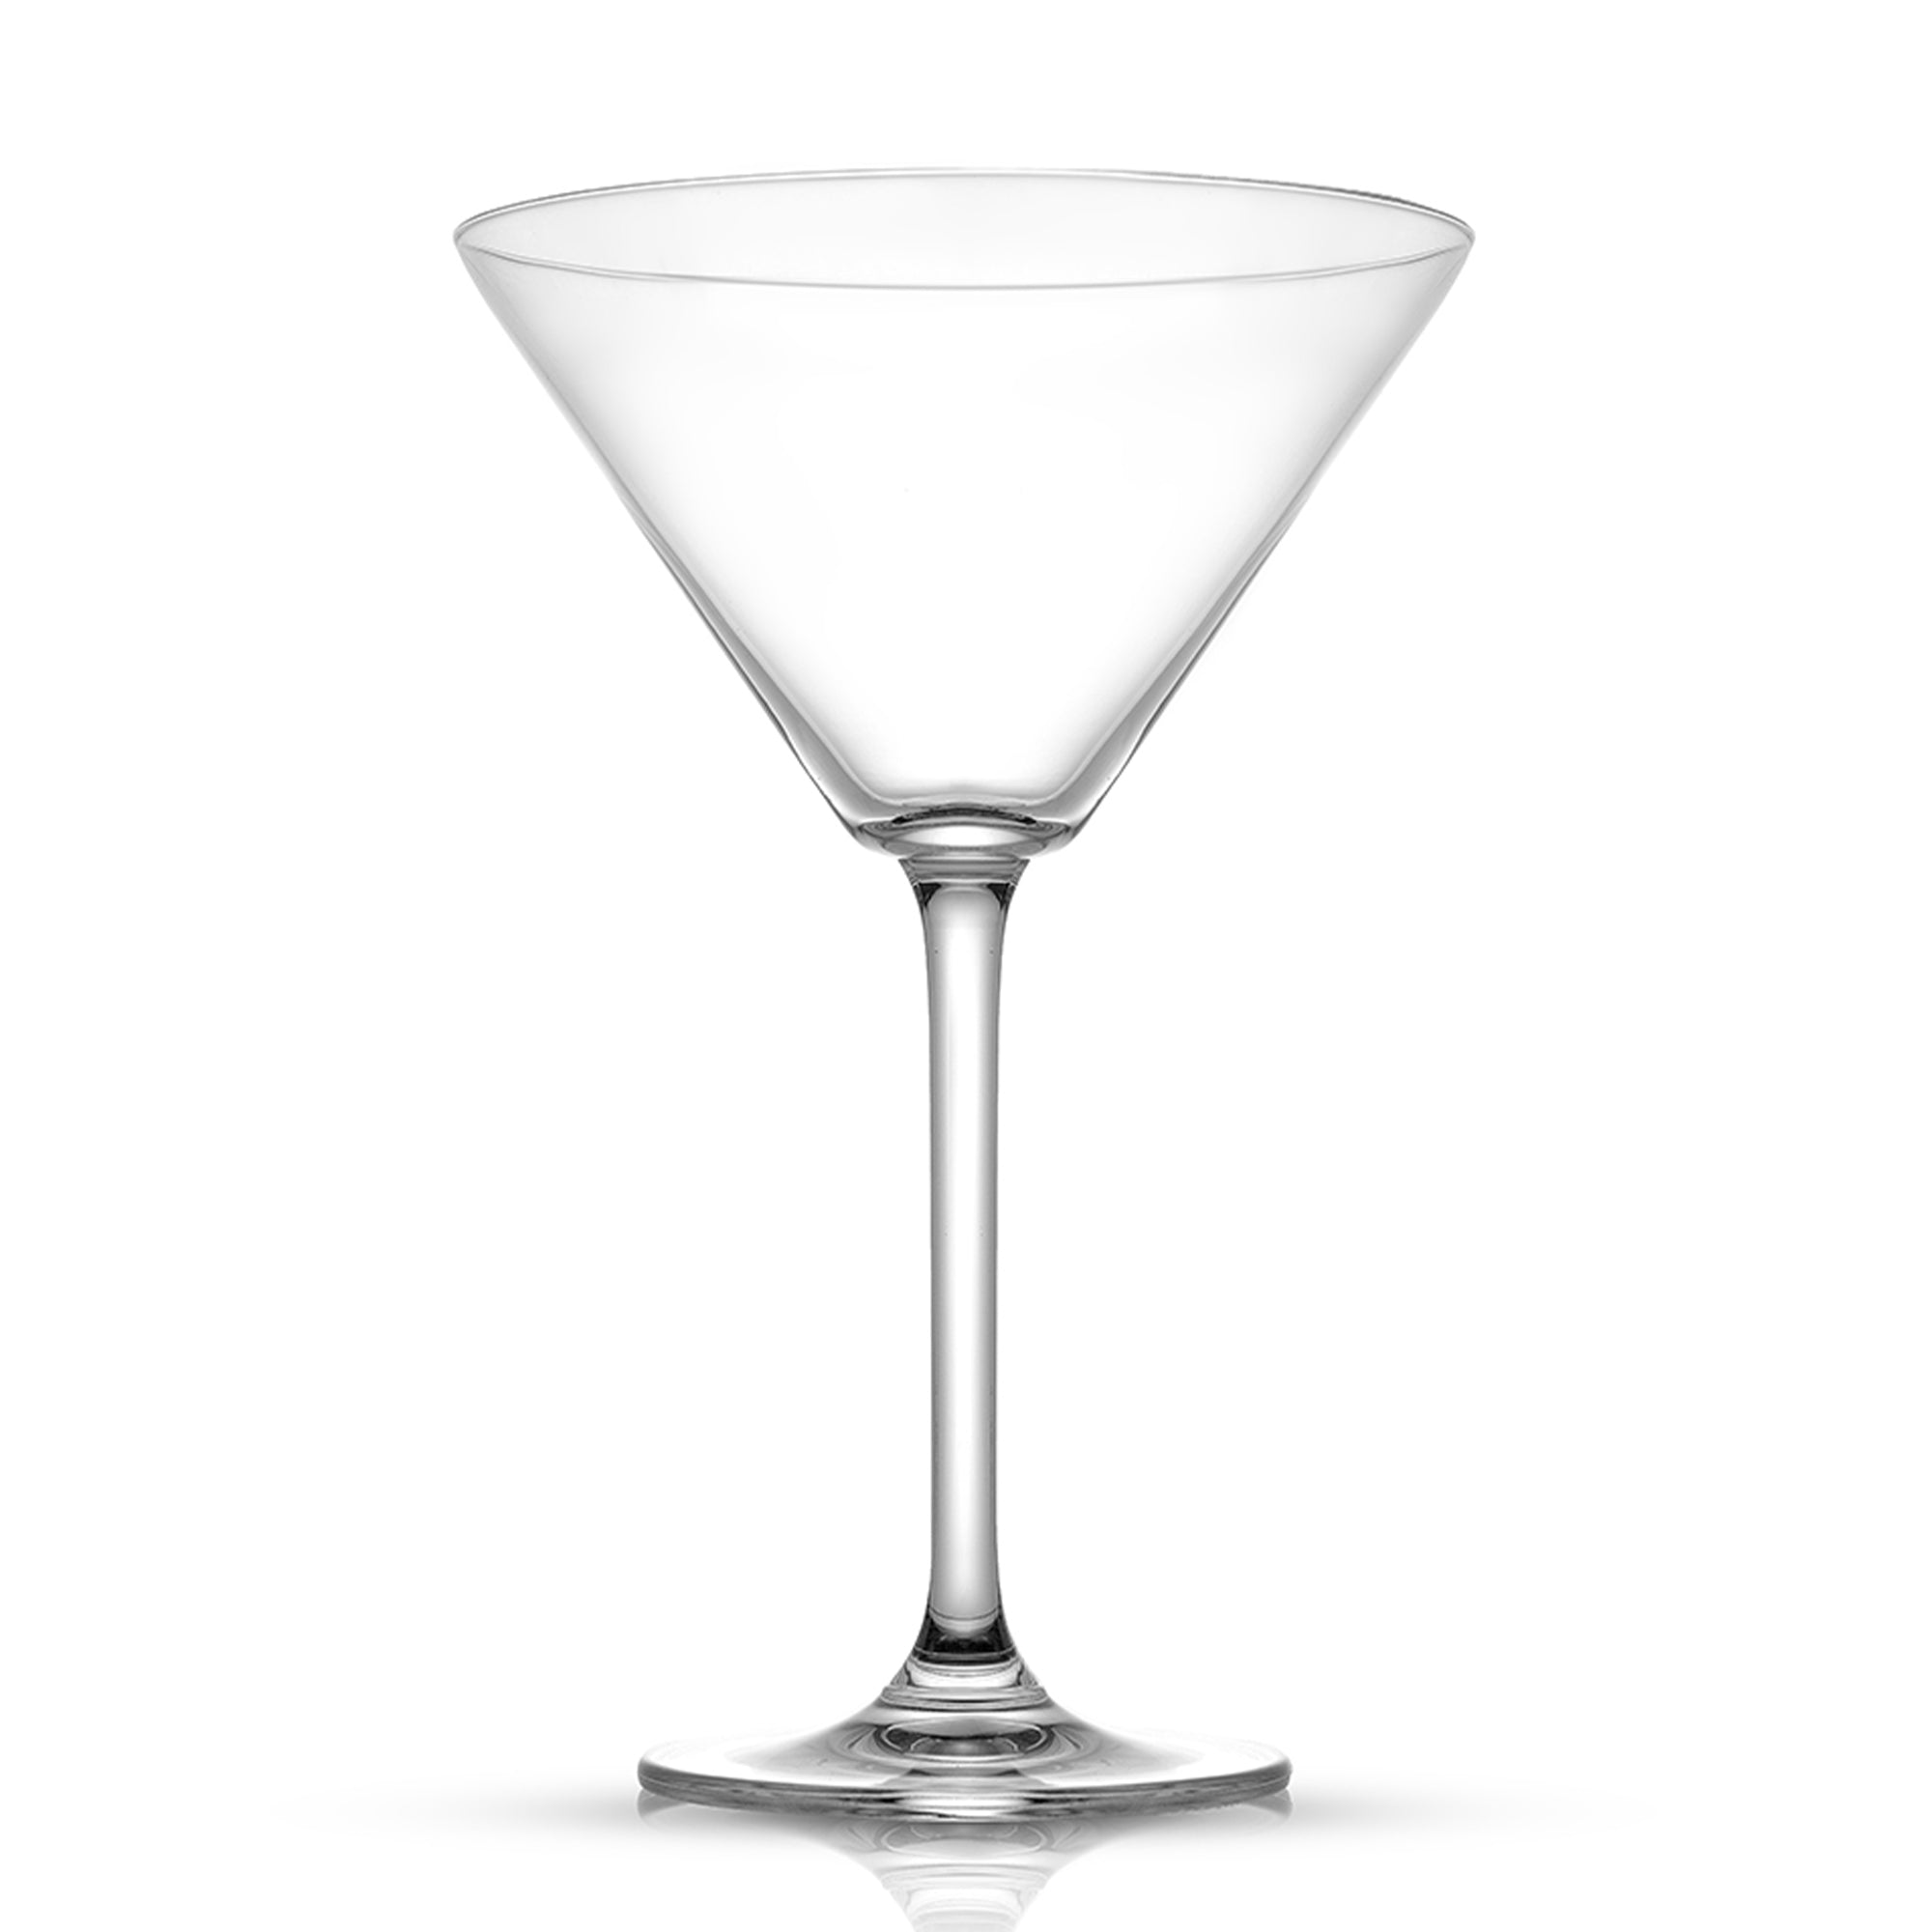 Olivia Premium Martini Glasses